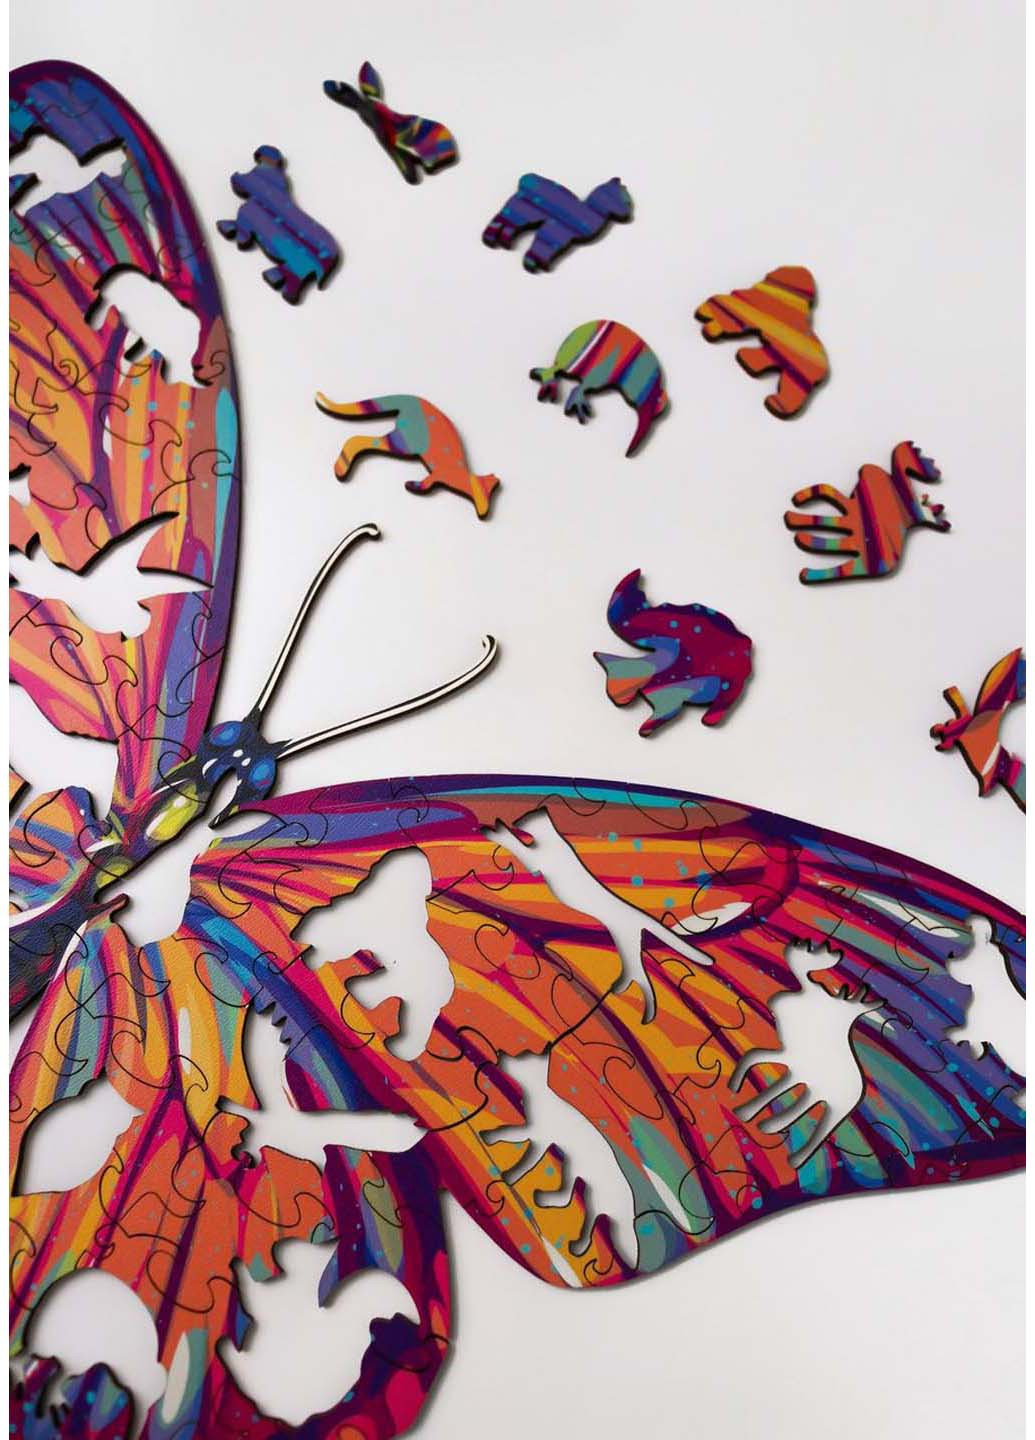 Пазл Moku modern butterfly 24 x 15.5 см 47 деталей (247100497)